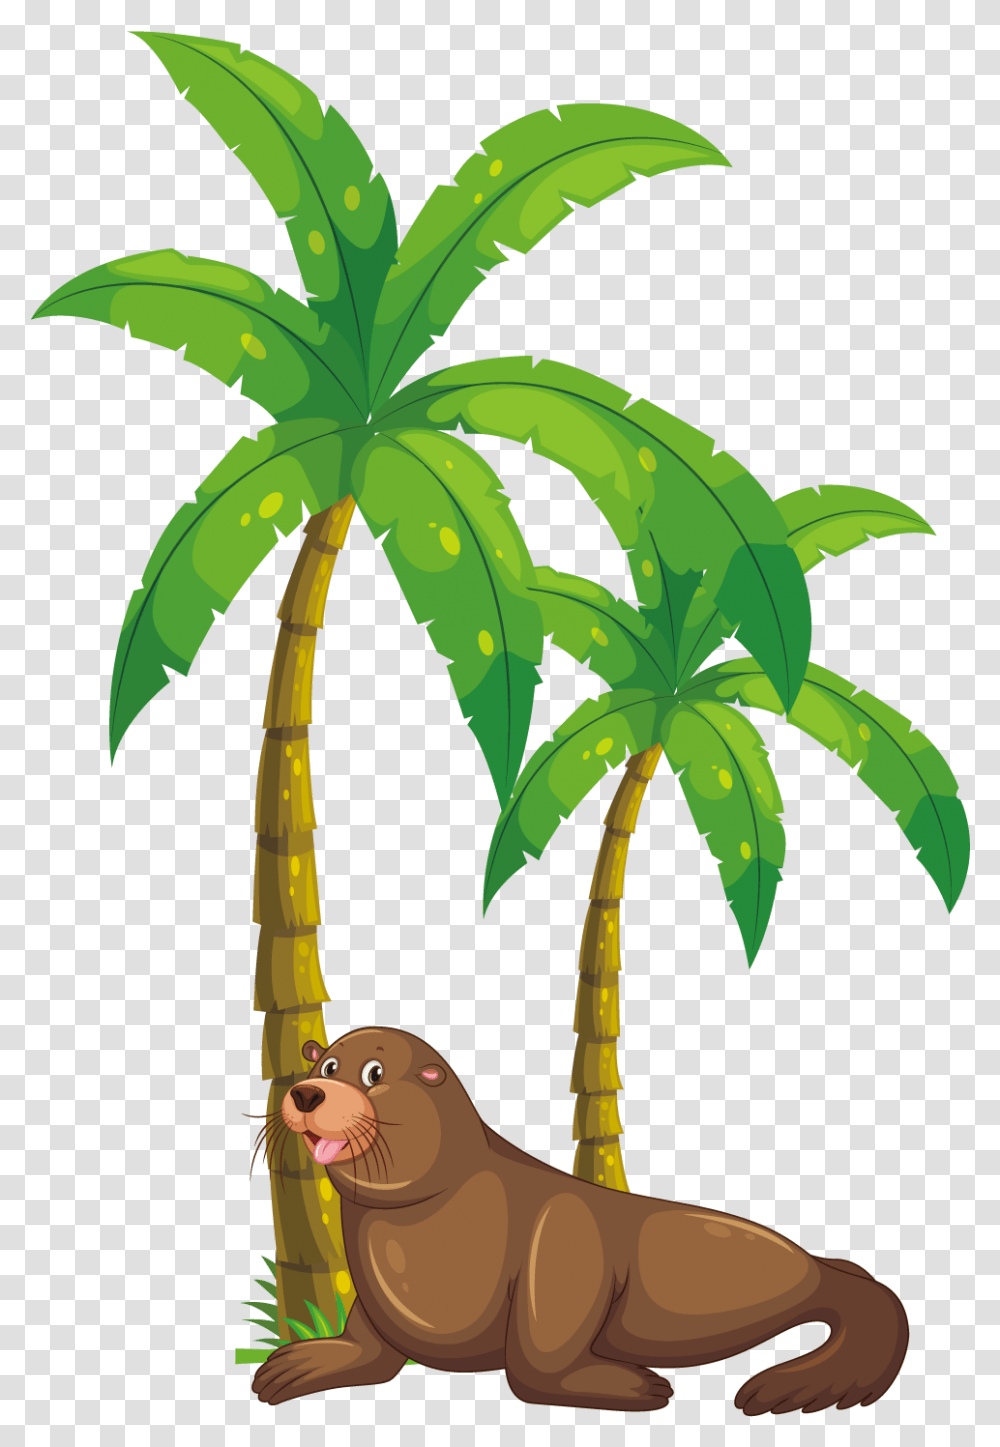 Palm Tree Clipart Kerala Coconut Tree Clipart Monkey Eating Banana, Plant, Arecaceae, Vegetation, Mammal Transparent Png